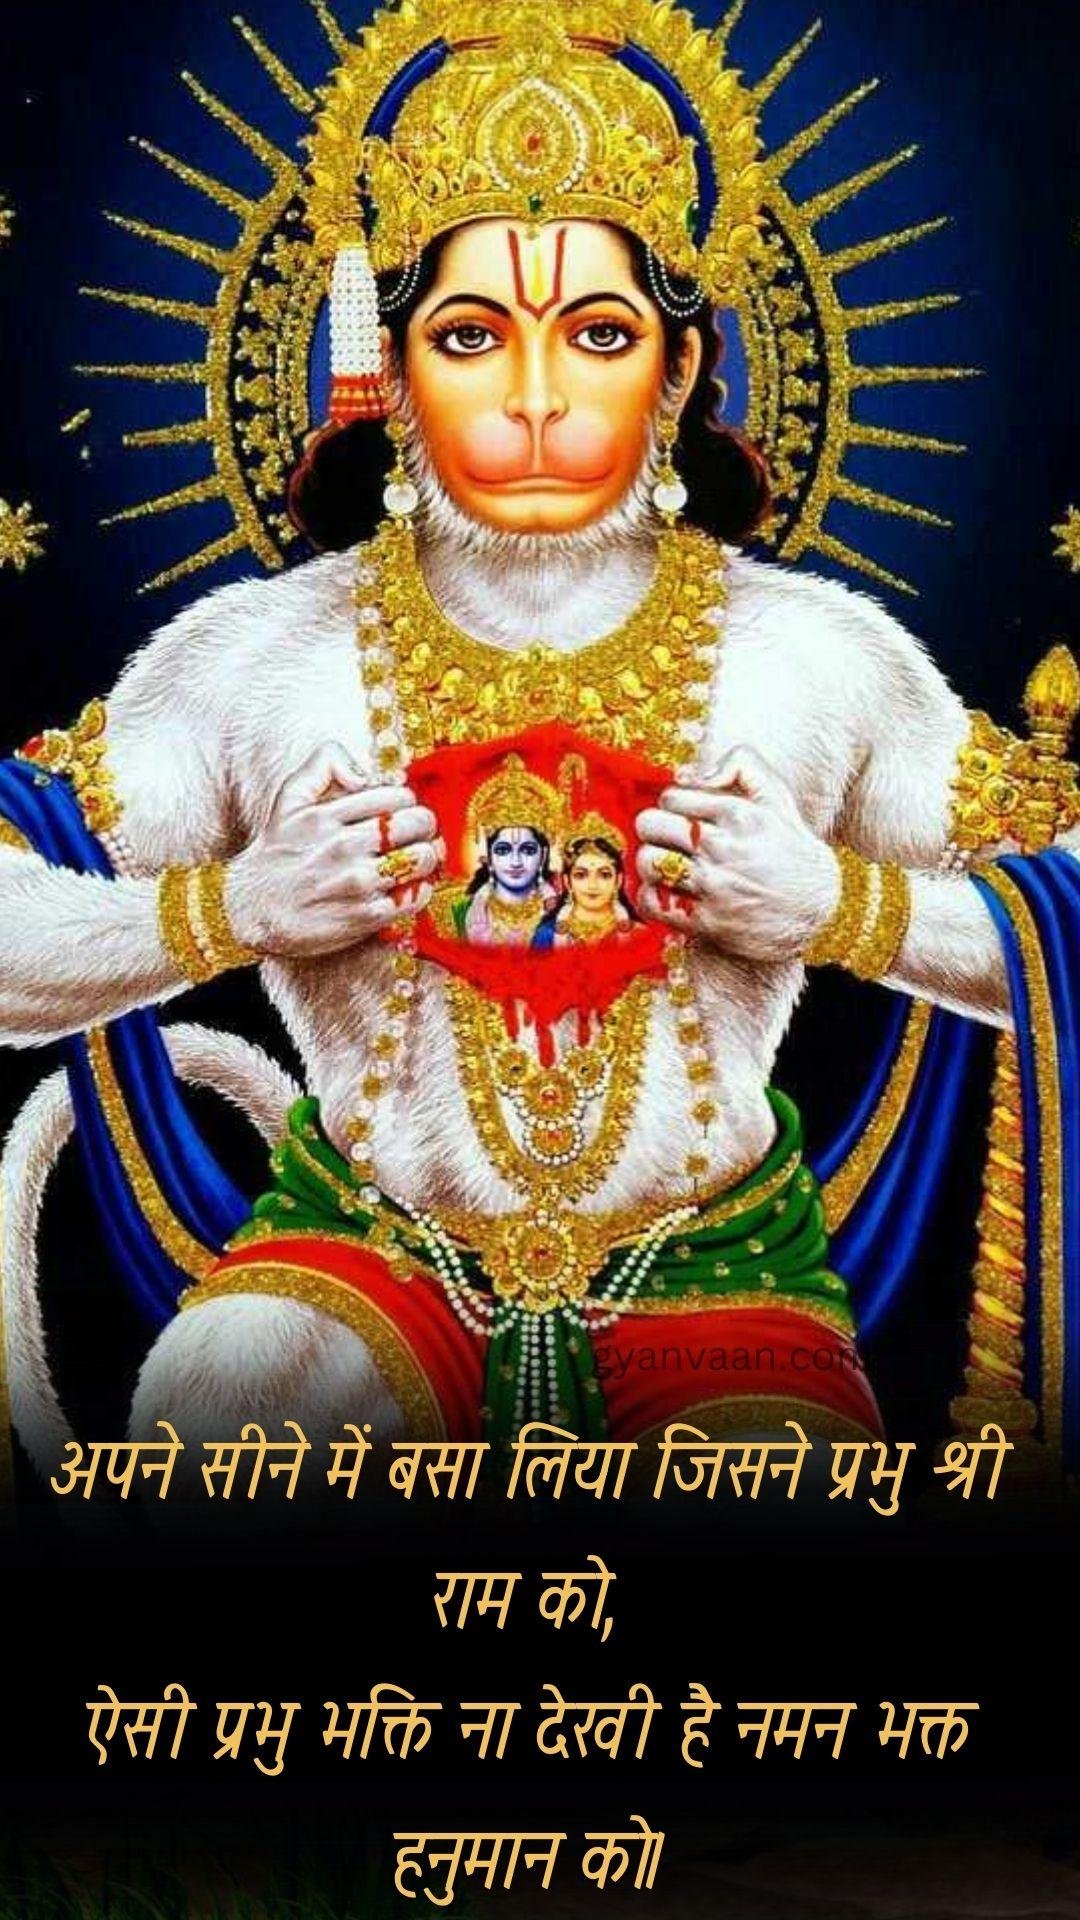 Hanuman Quotes Shayari And Whatsapp Status For Mobile With Hanuman Images And Photos 11 - Hanuman Images